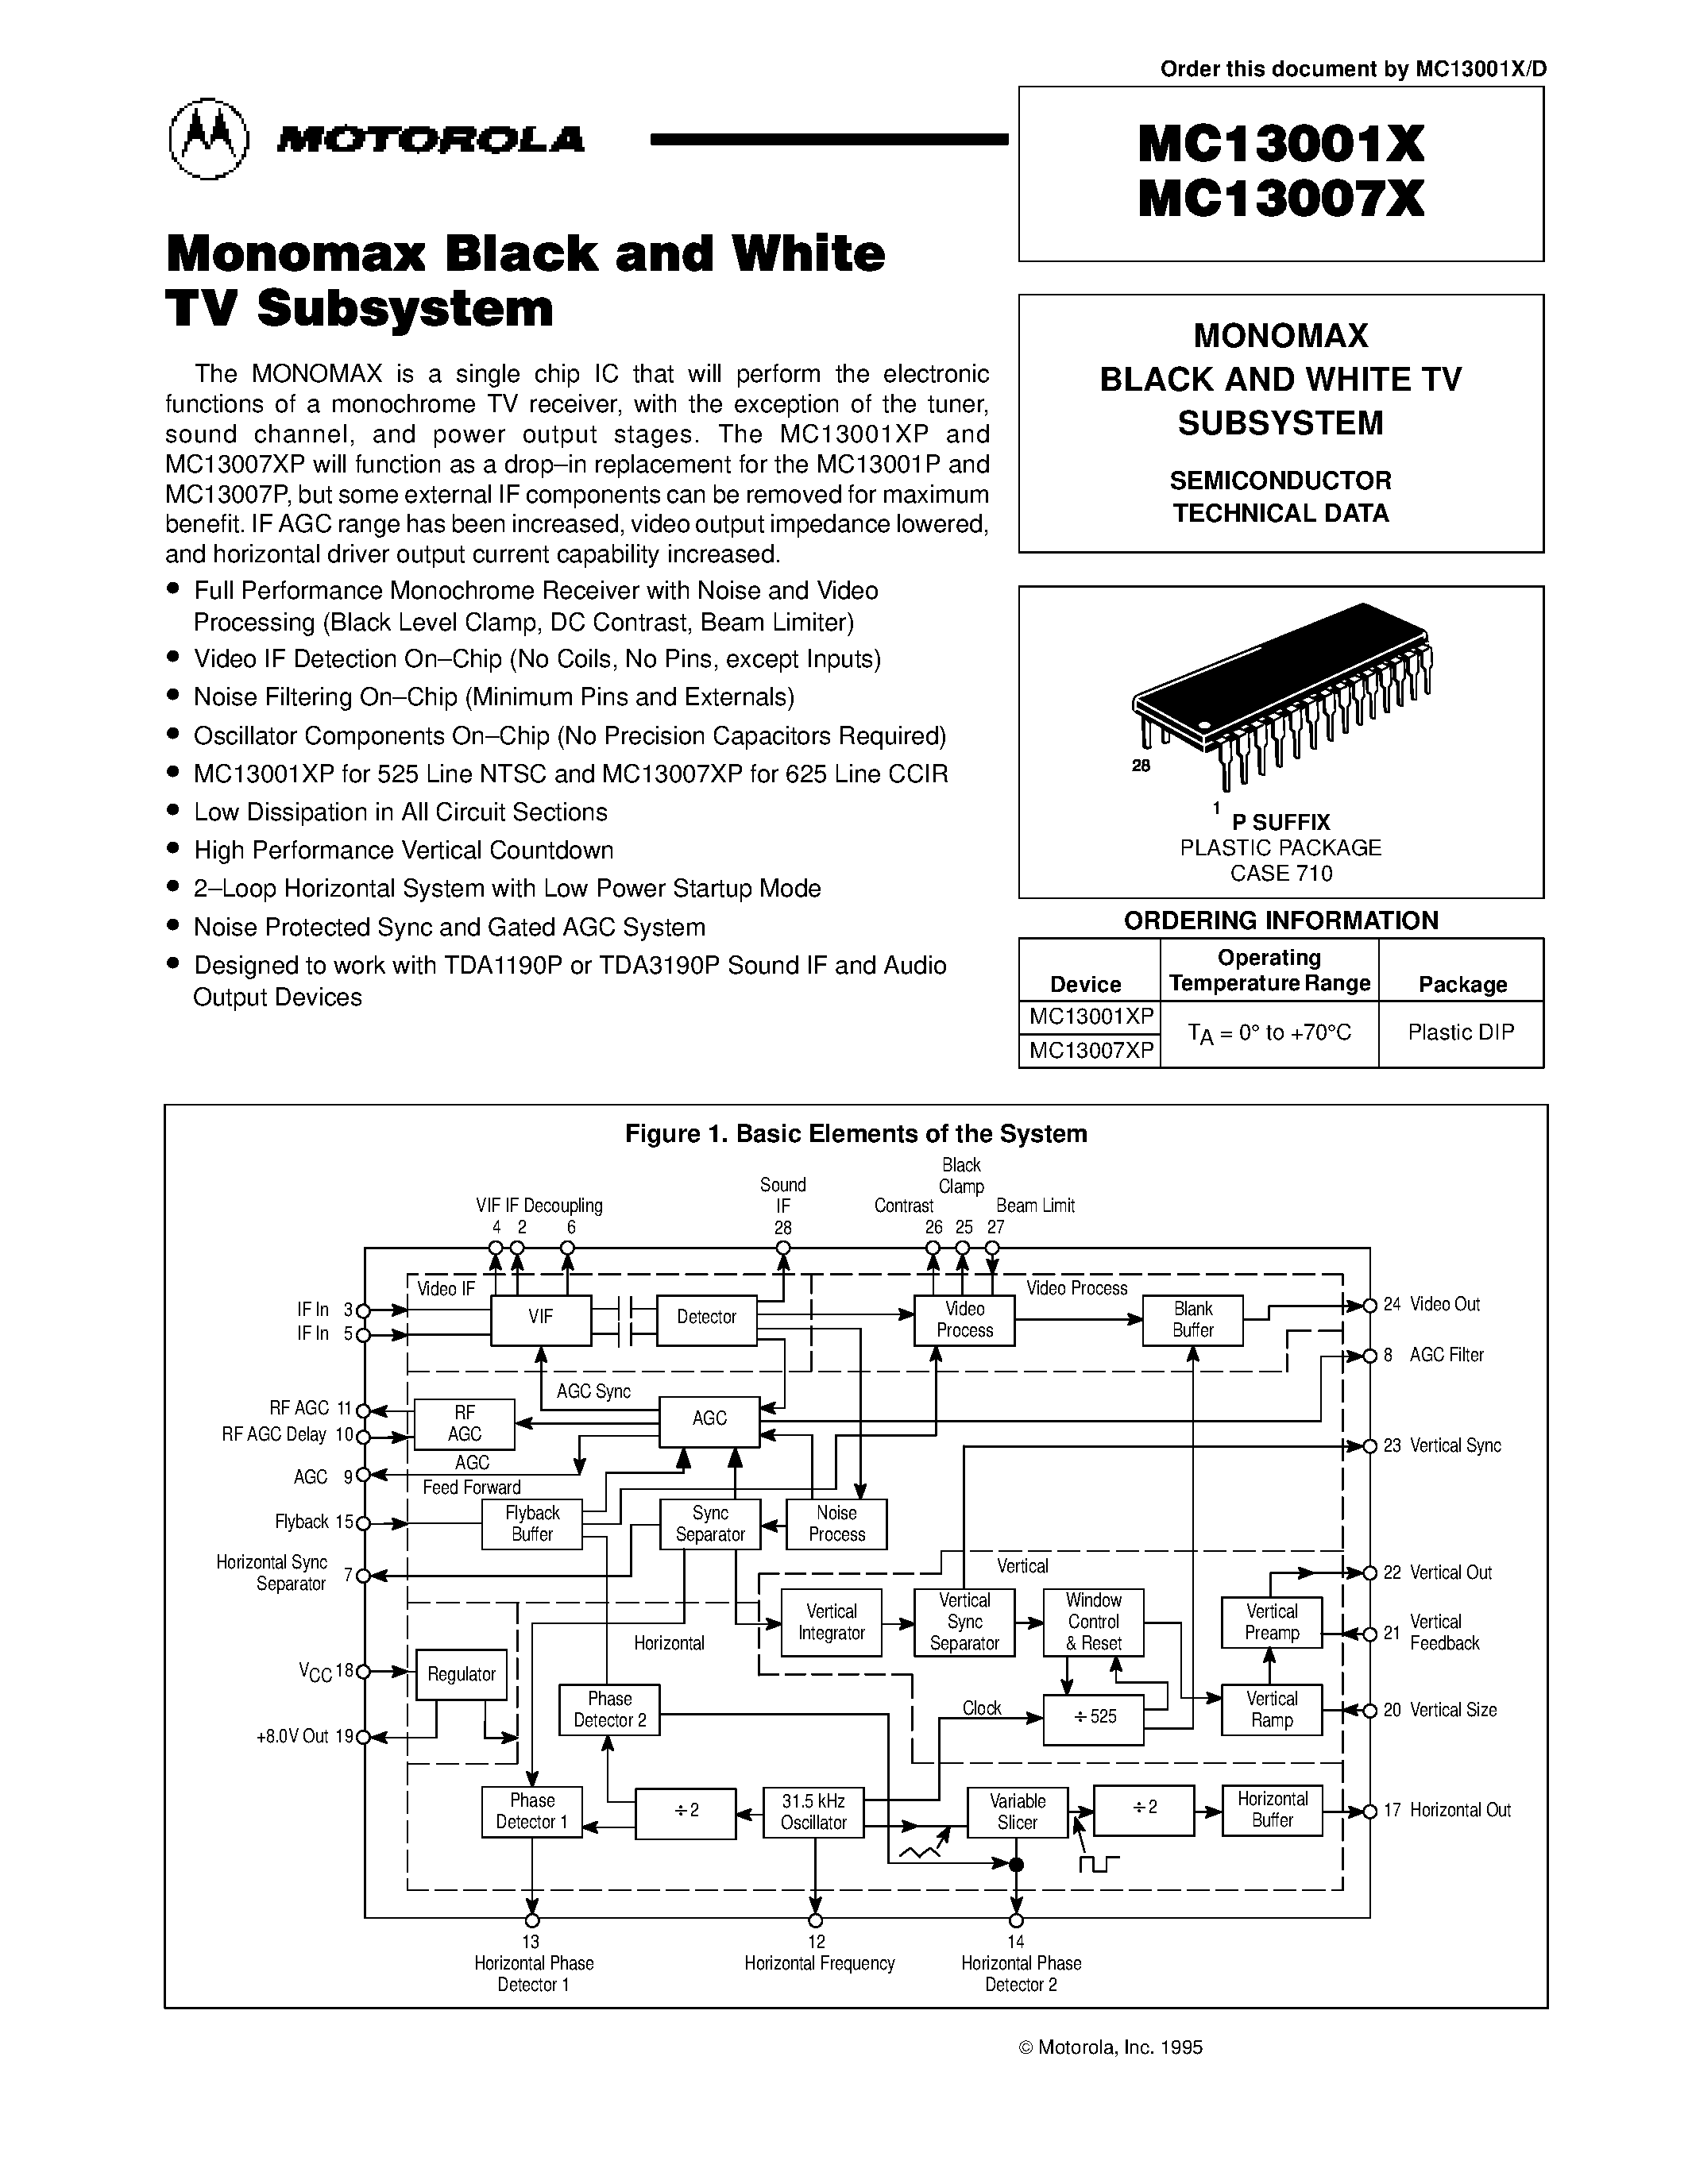 Datasheet MC13001XP - MONOMAX BLACK AND WHITE TV SUBSYSTEM page 1